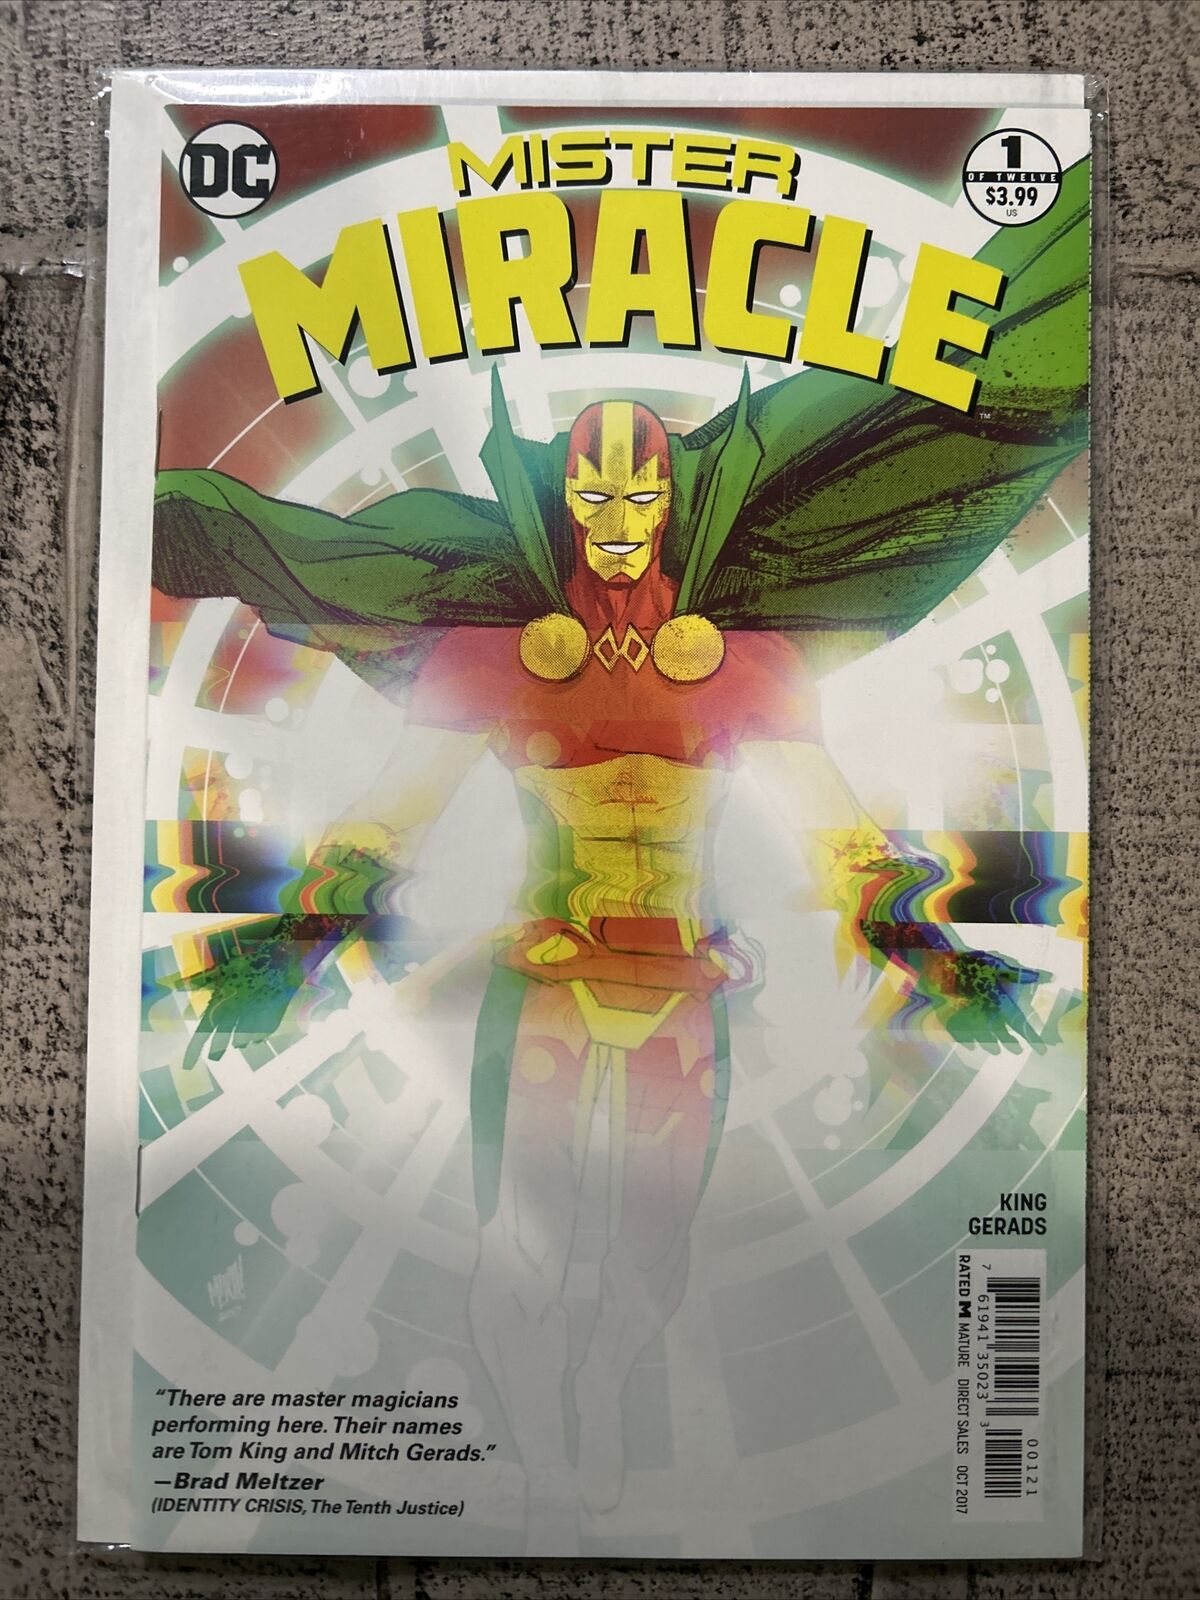 Mister Miracle #1 (DC Comics April 2017)